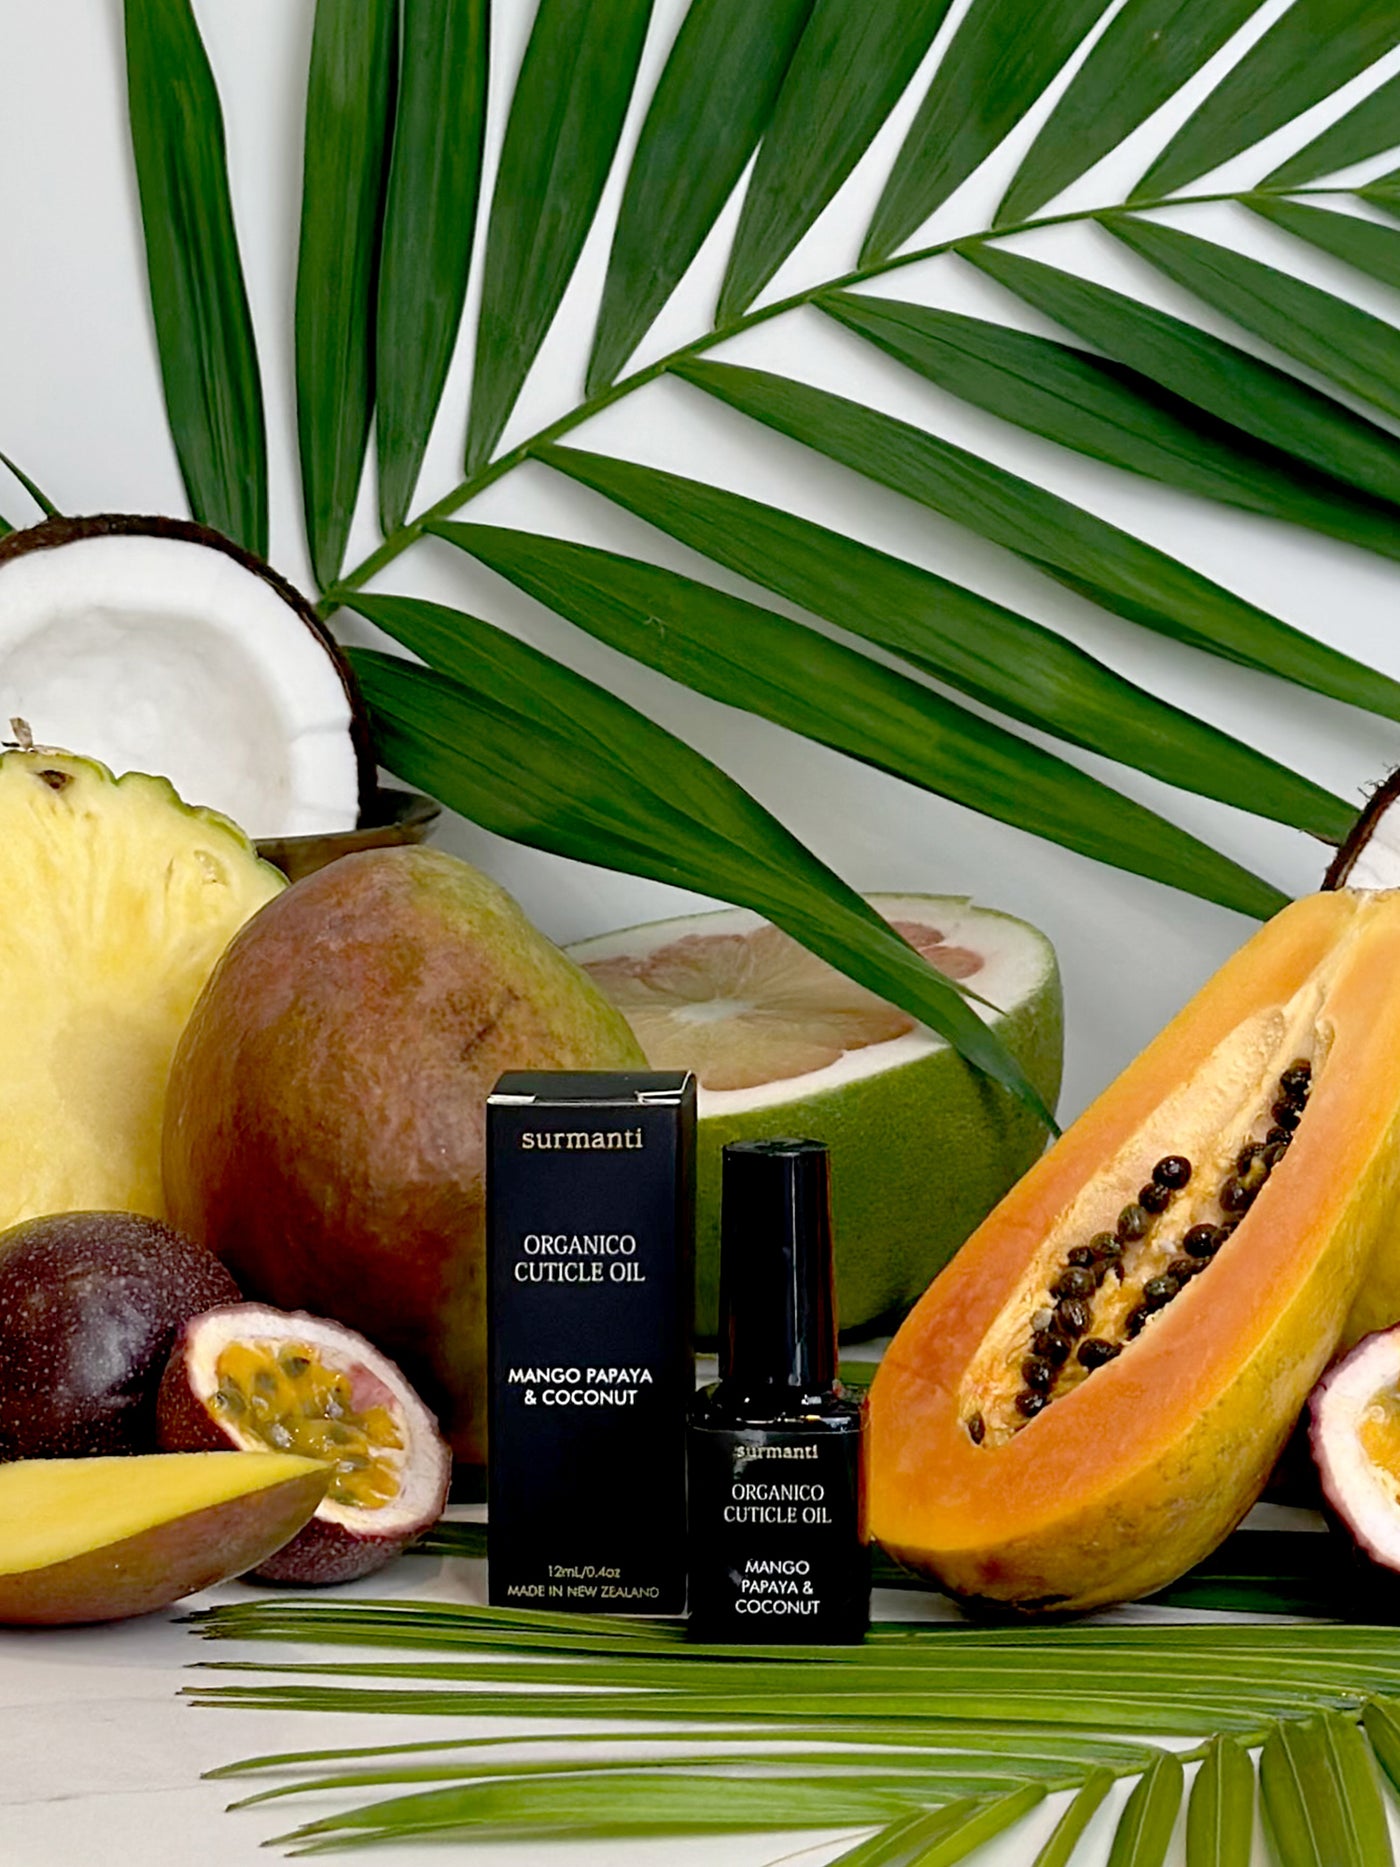 Mango Papaya & Coconut Organico Cuticle Oil